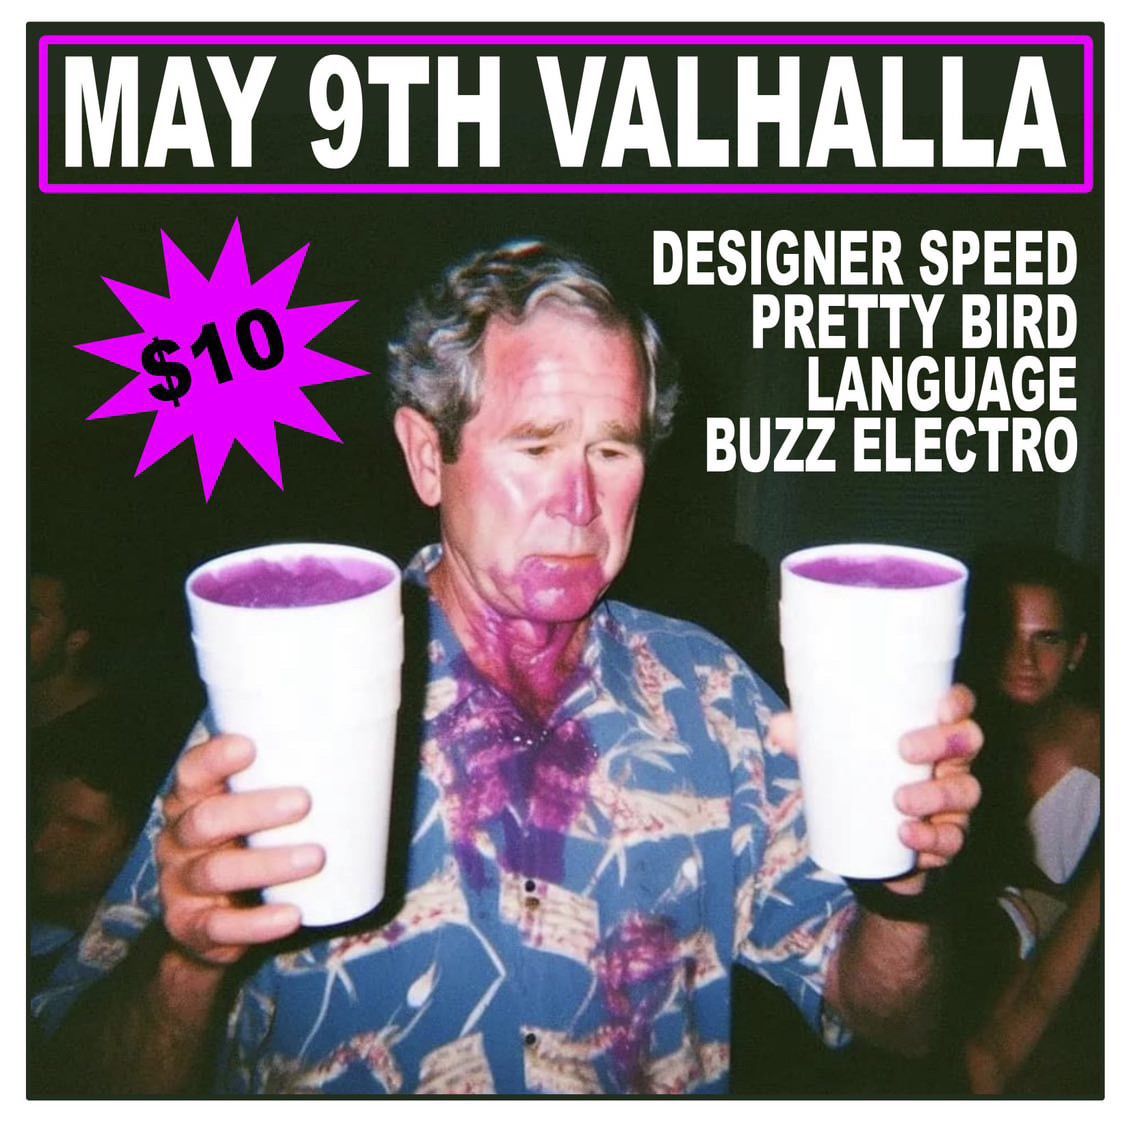 Thursday May 9 Designer Speed, Pretty Bird, Language, Buzz Electro